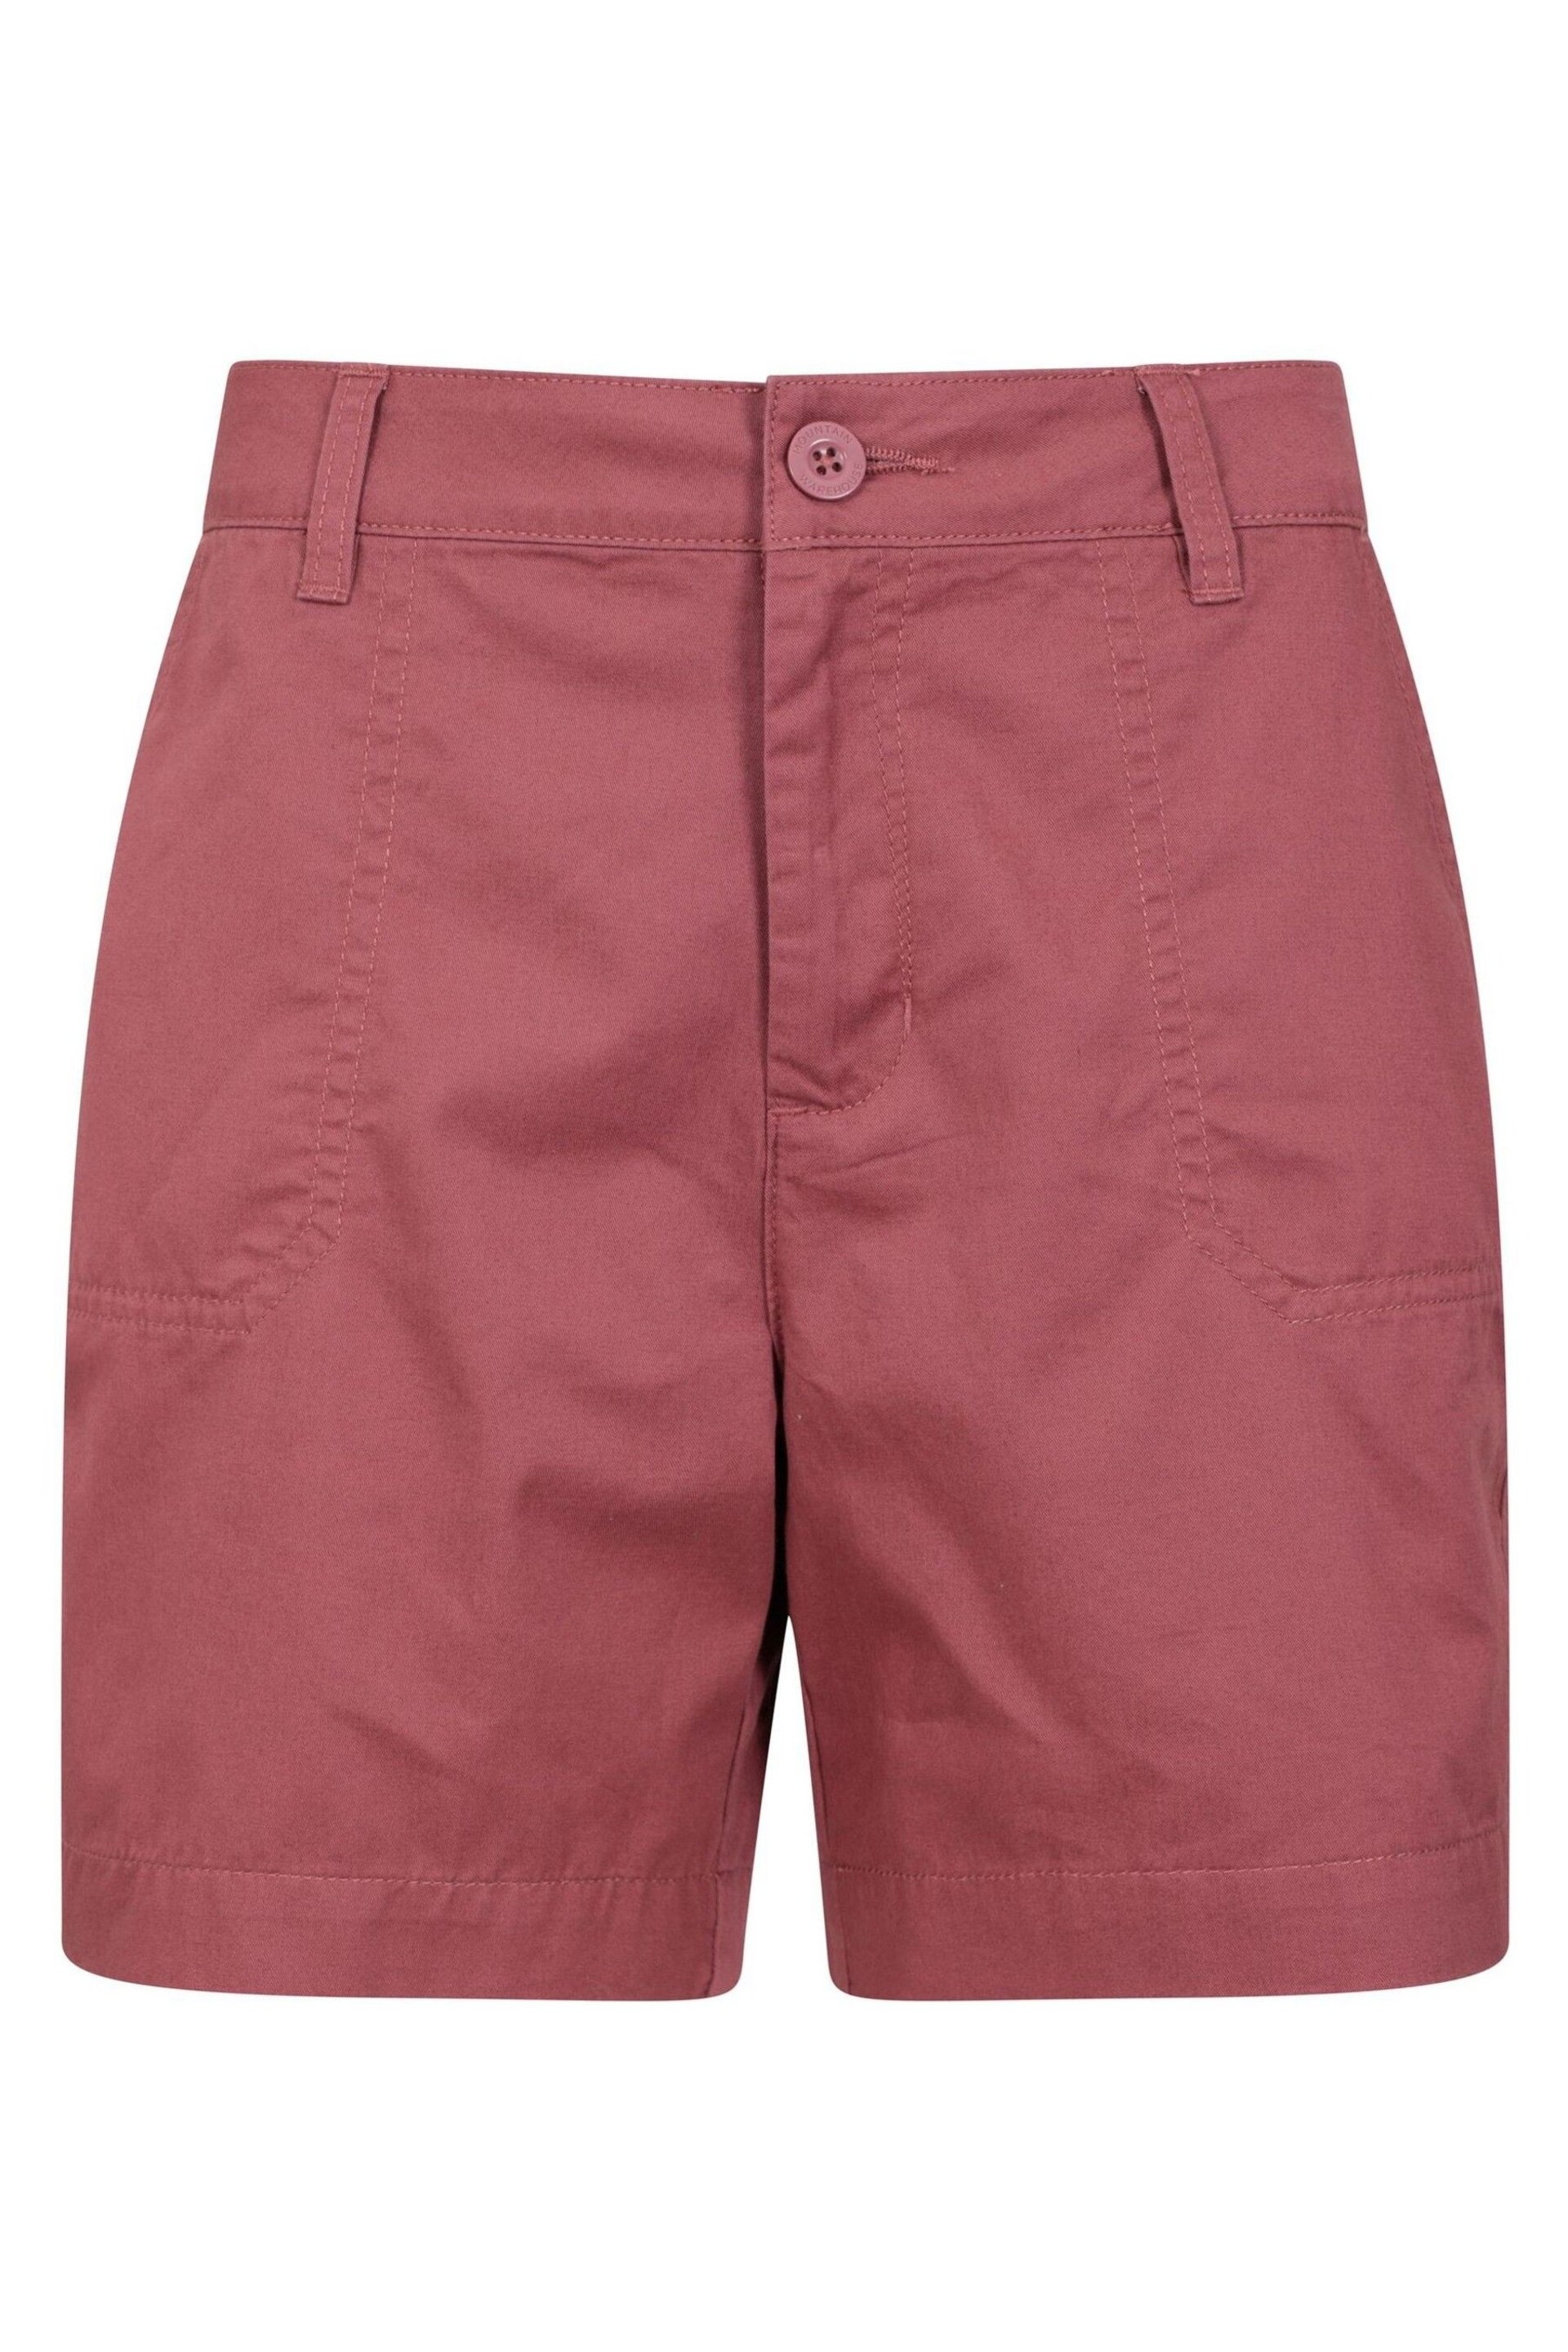 Mountain Warehouse Pink Bayside 100% Organic Cotton Womens Shorts - Image 1 of 5